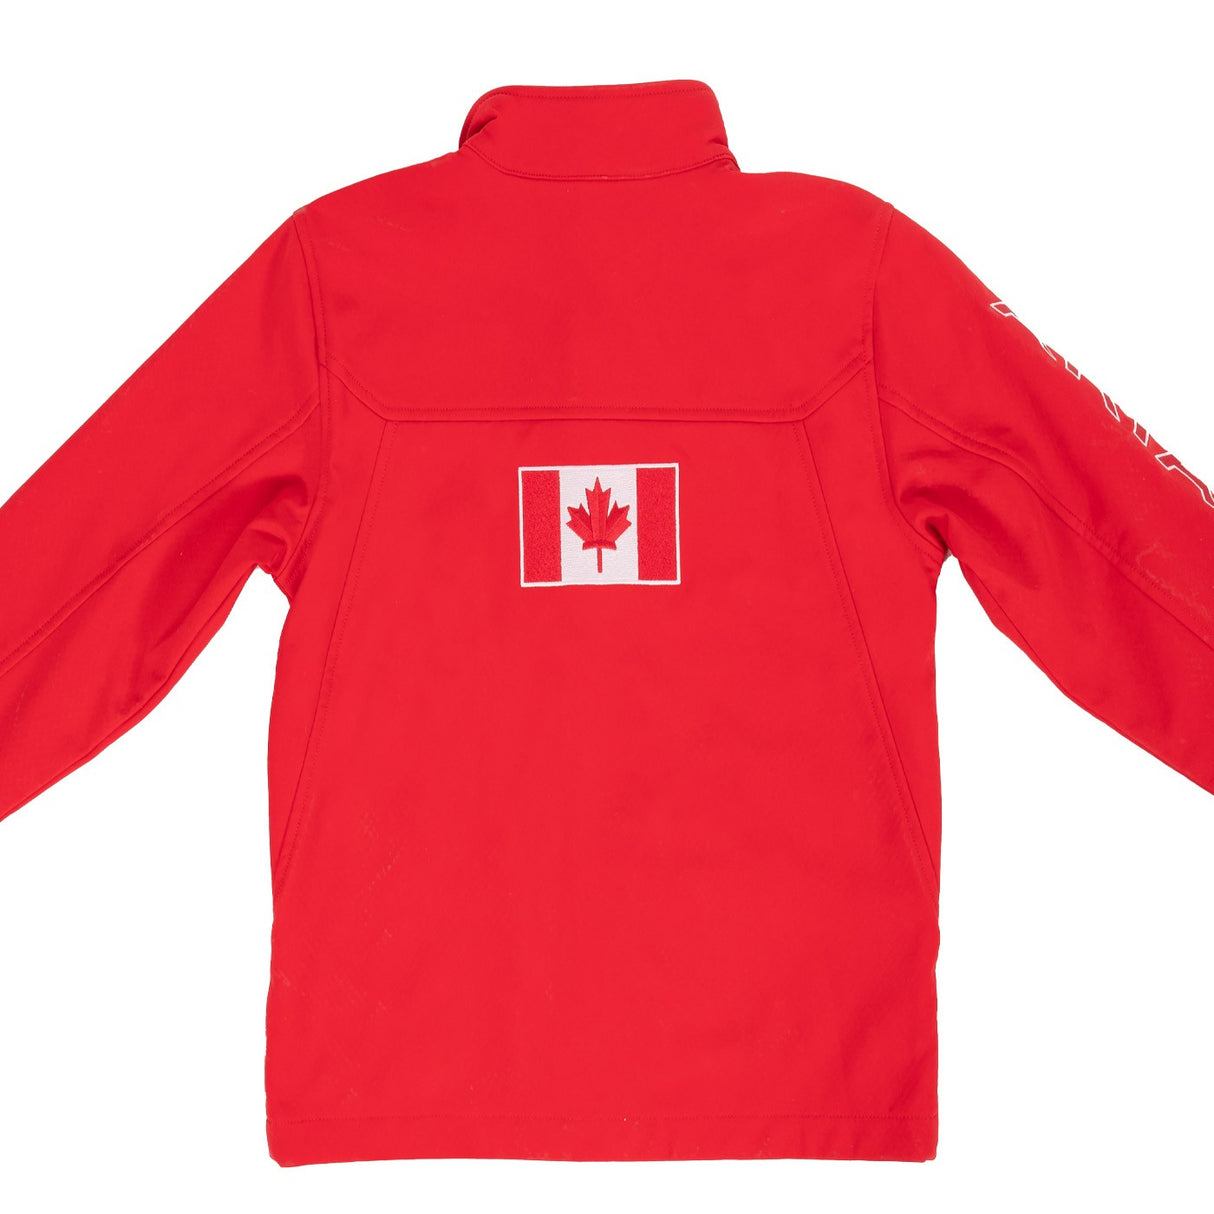 Ariat Team Canada Soft Shell Jacket - Men's